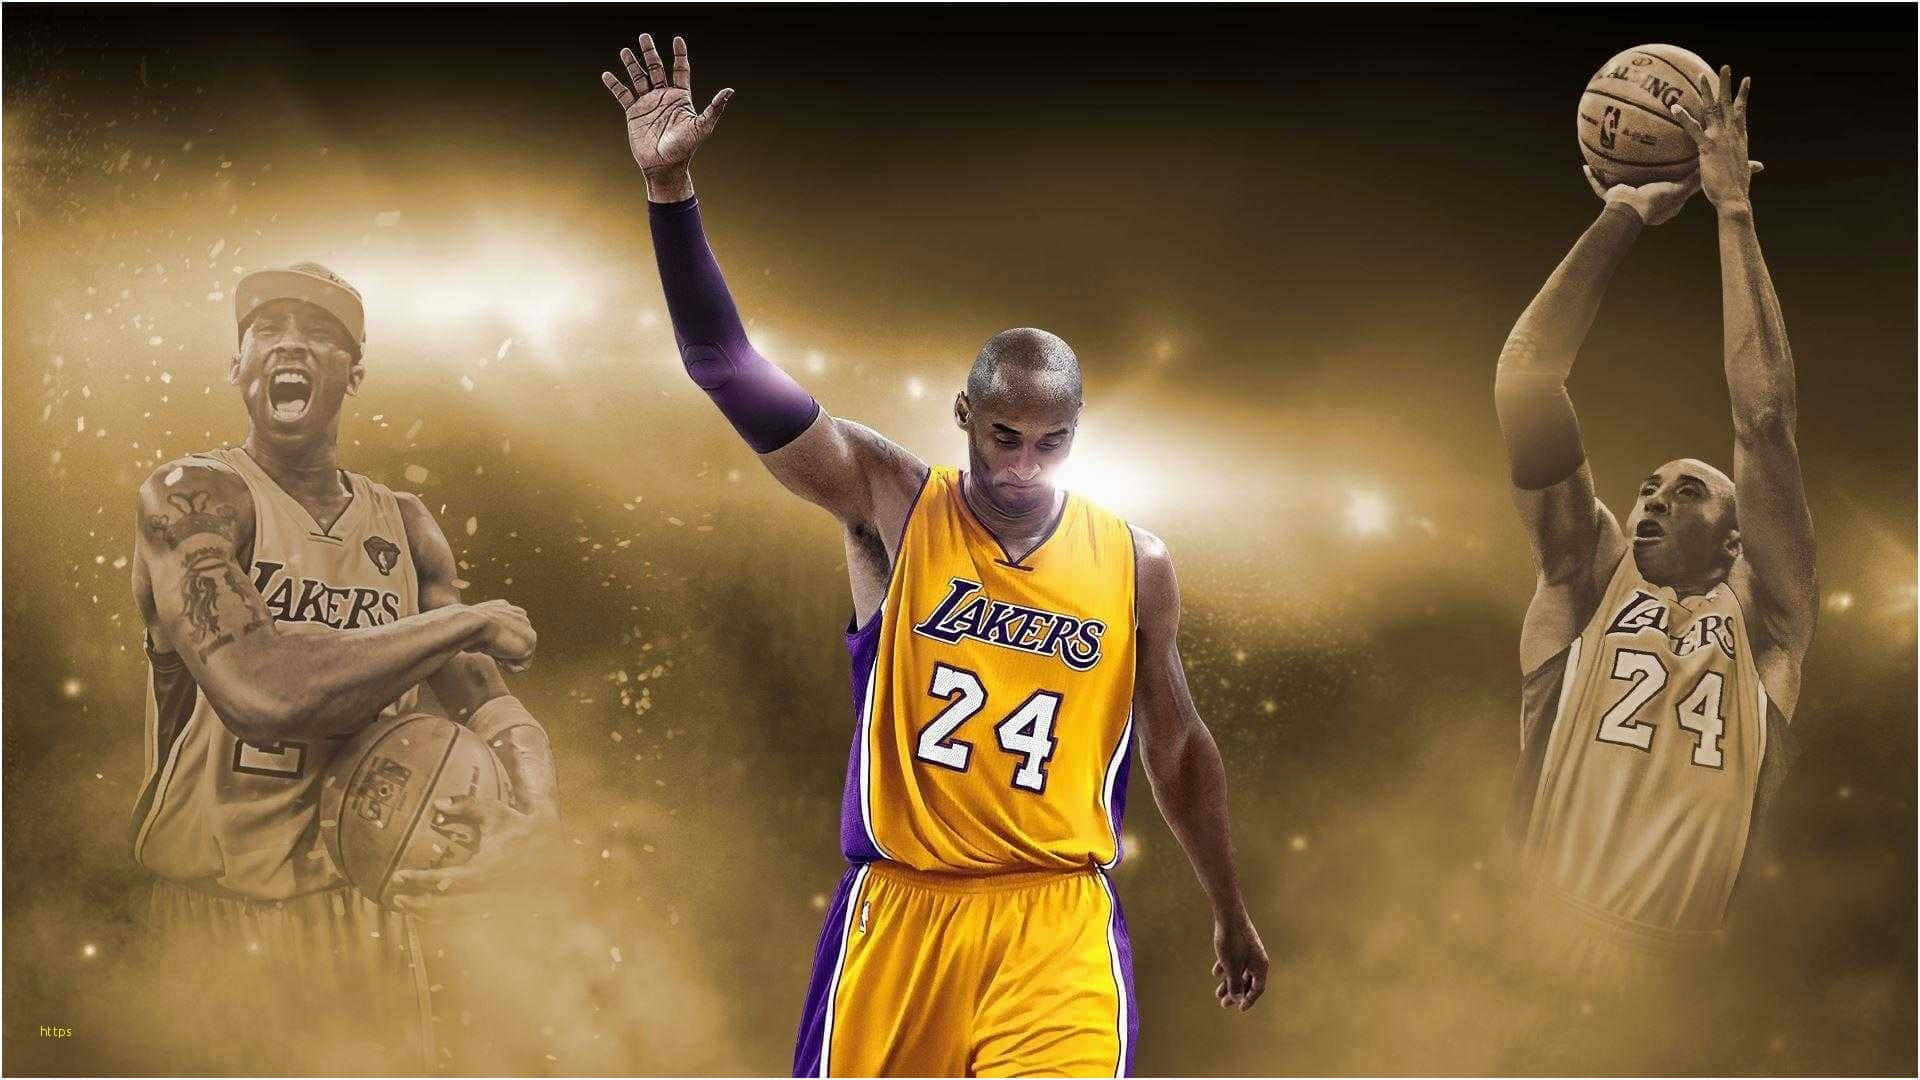 Download Kobe Bryant Cool Basketball iPhone Yellow Wallpaper